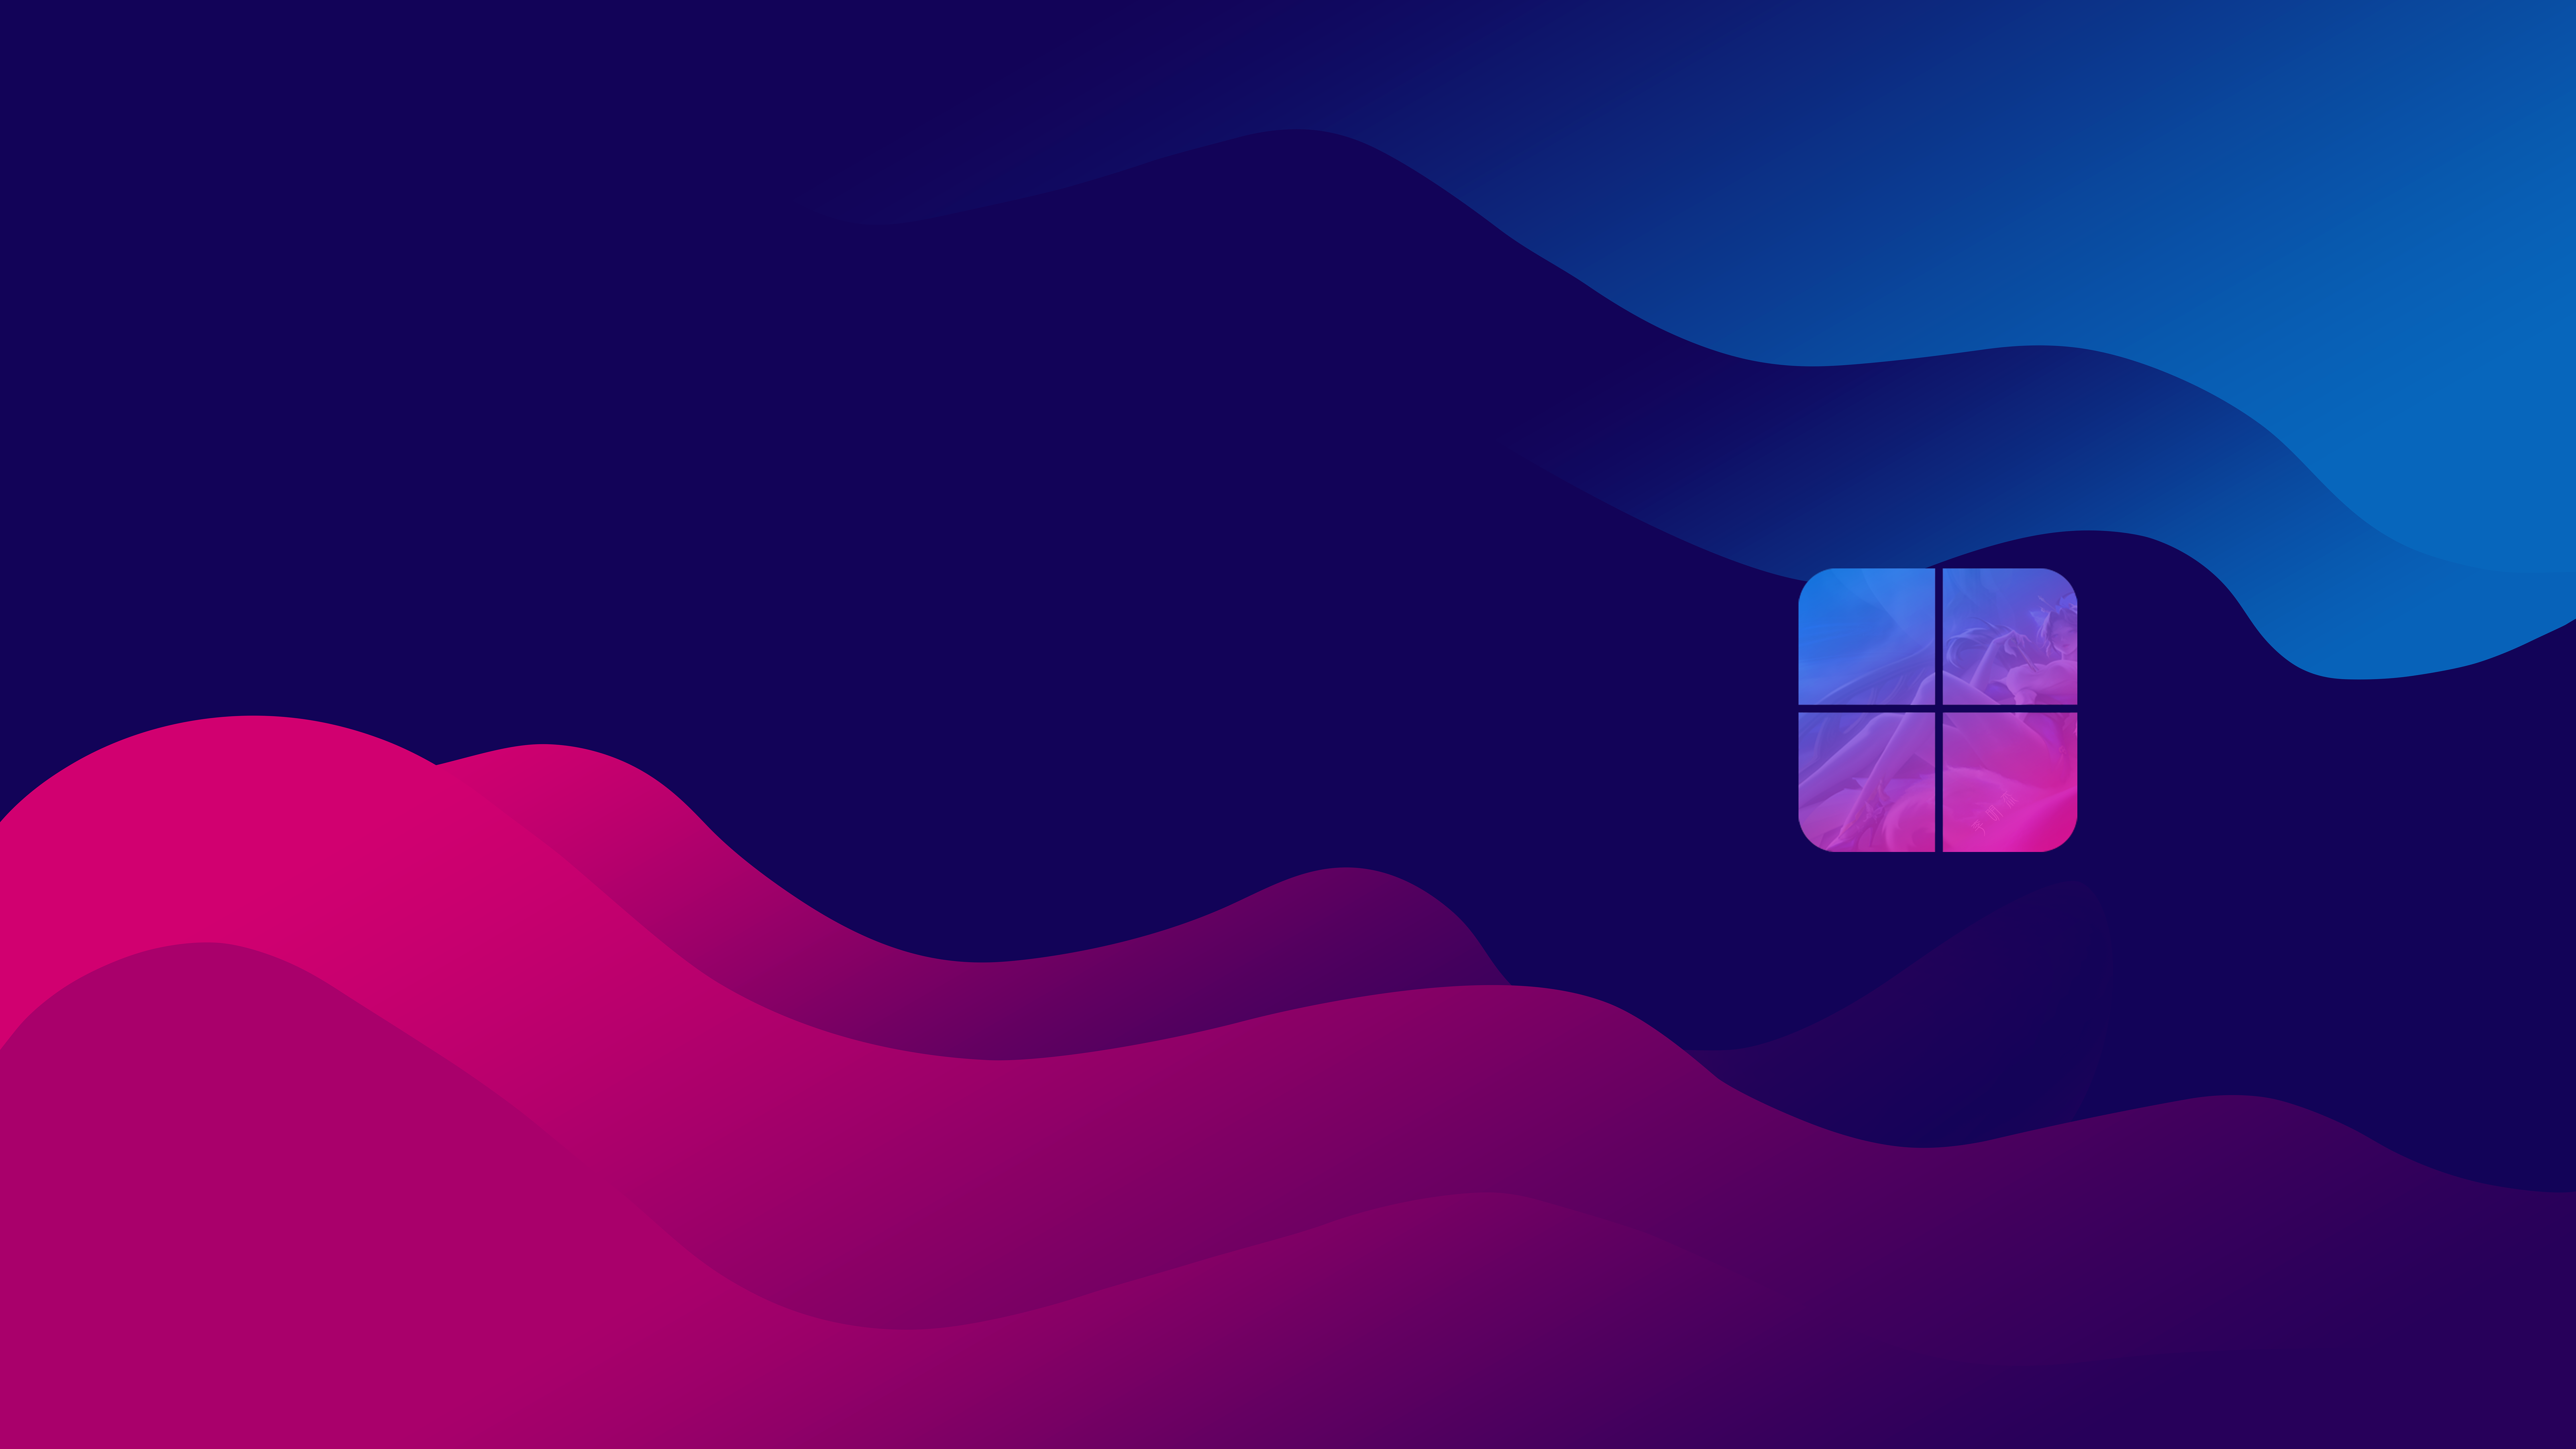 Windows 12 Concept Art Waveforms Digital Art Logo Simple Background Minimalism 7680x4320